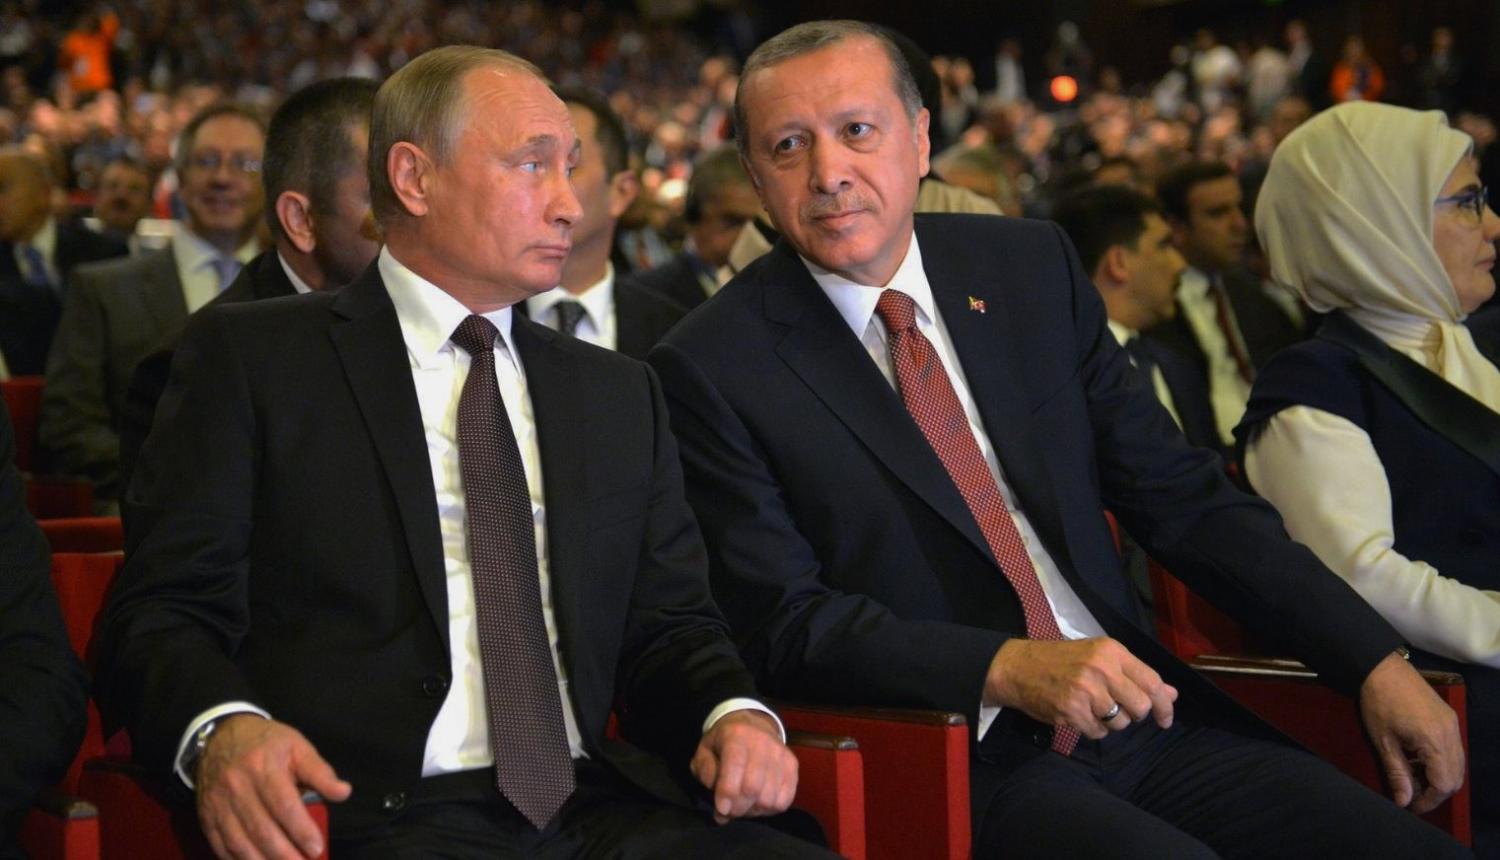 TurkStream: Putin’s latest triumph over the West? (Part 1)